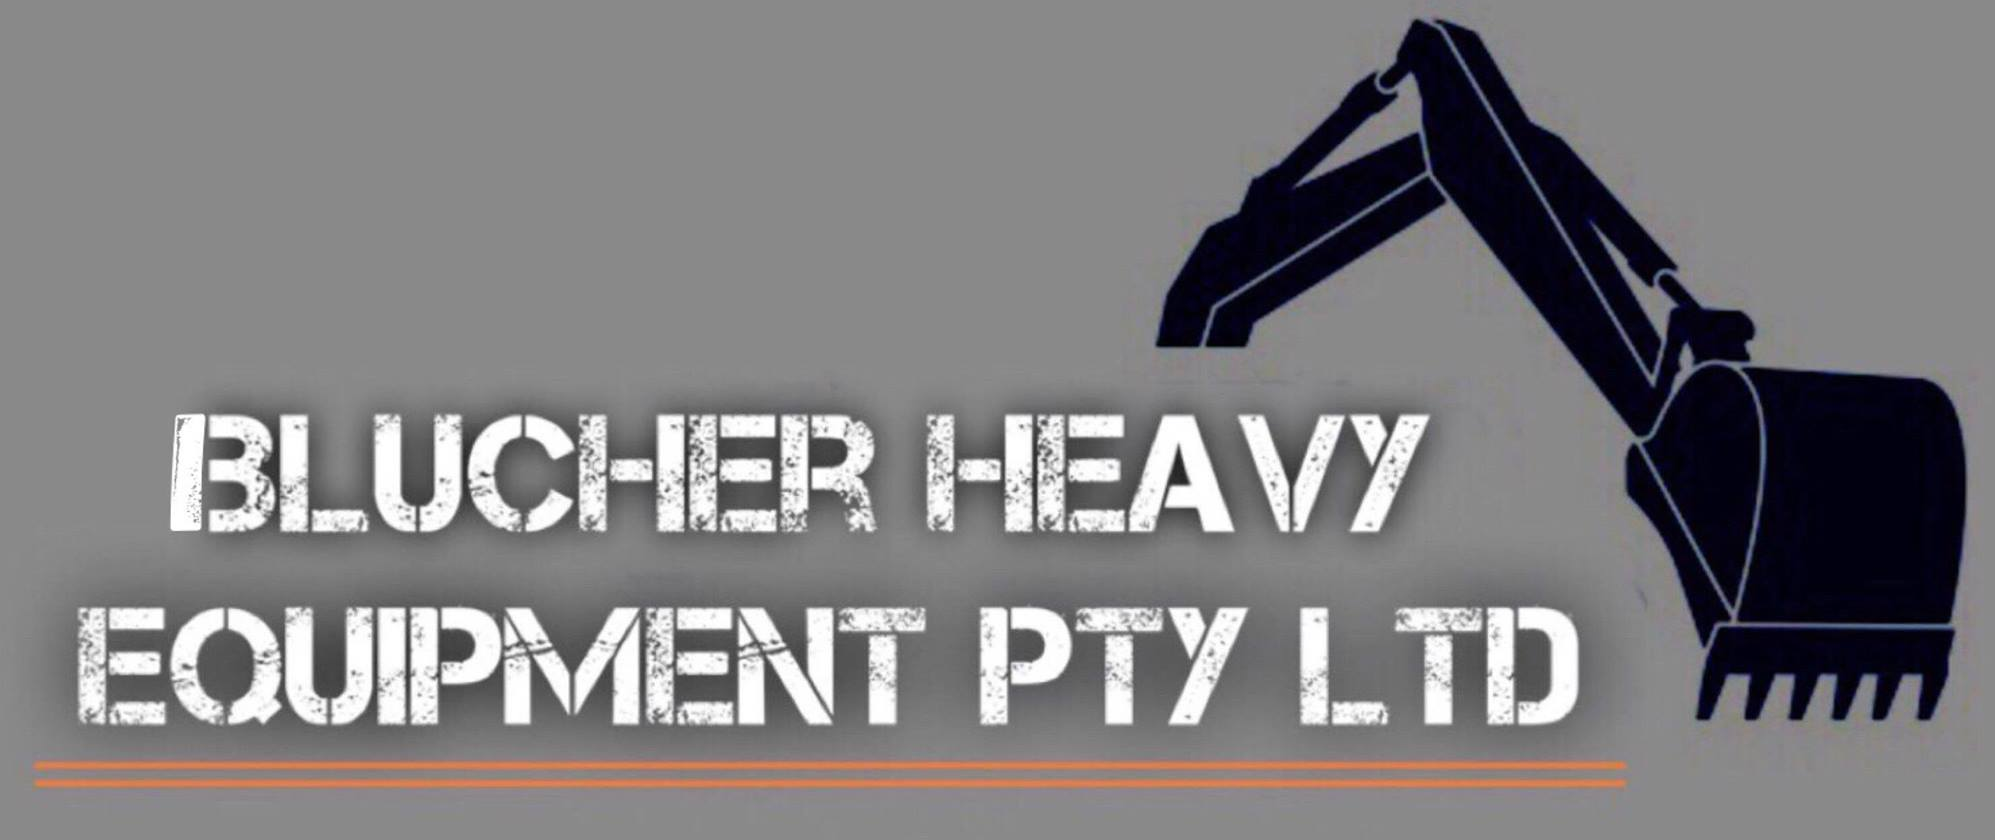 Blucher Heavy Equipment Pty Ltd